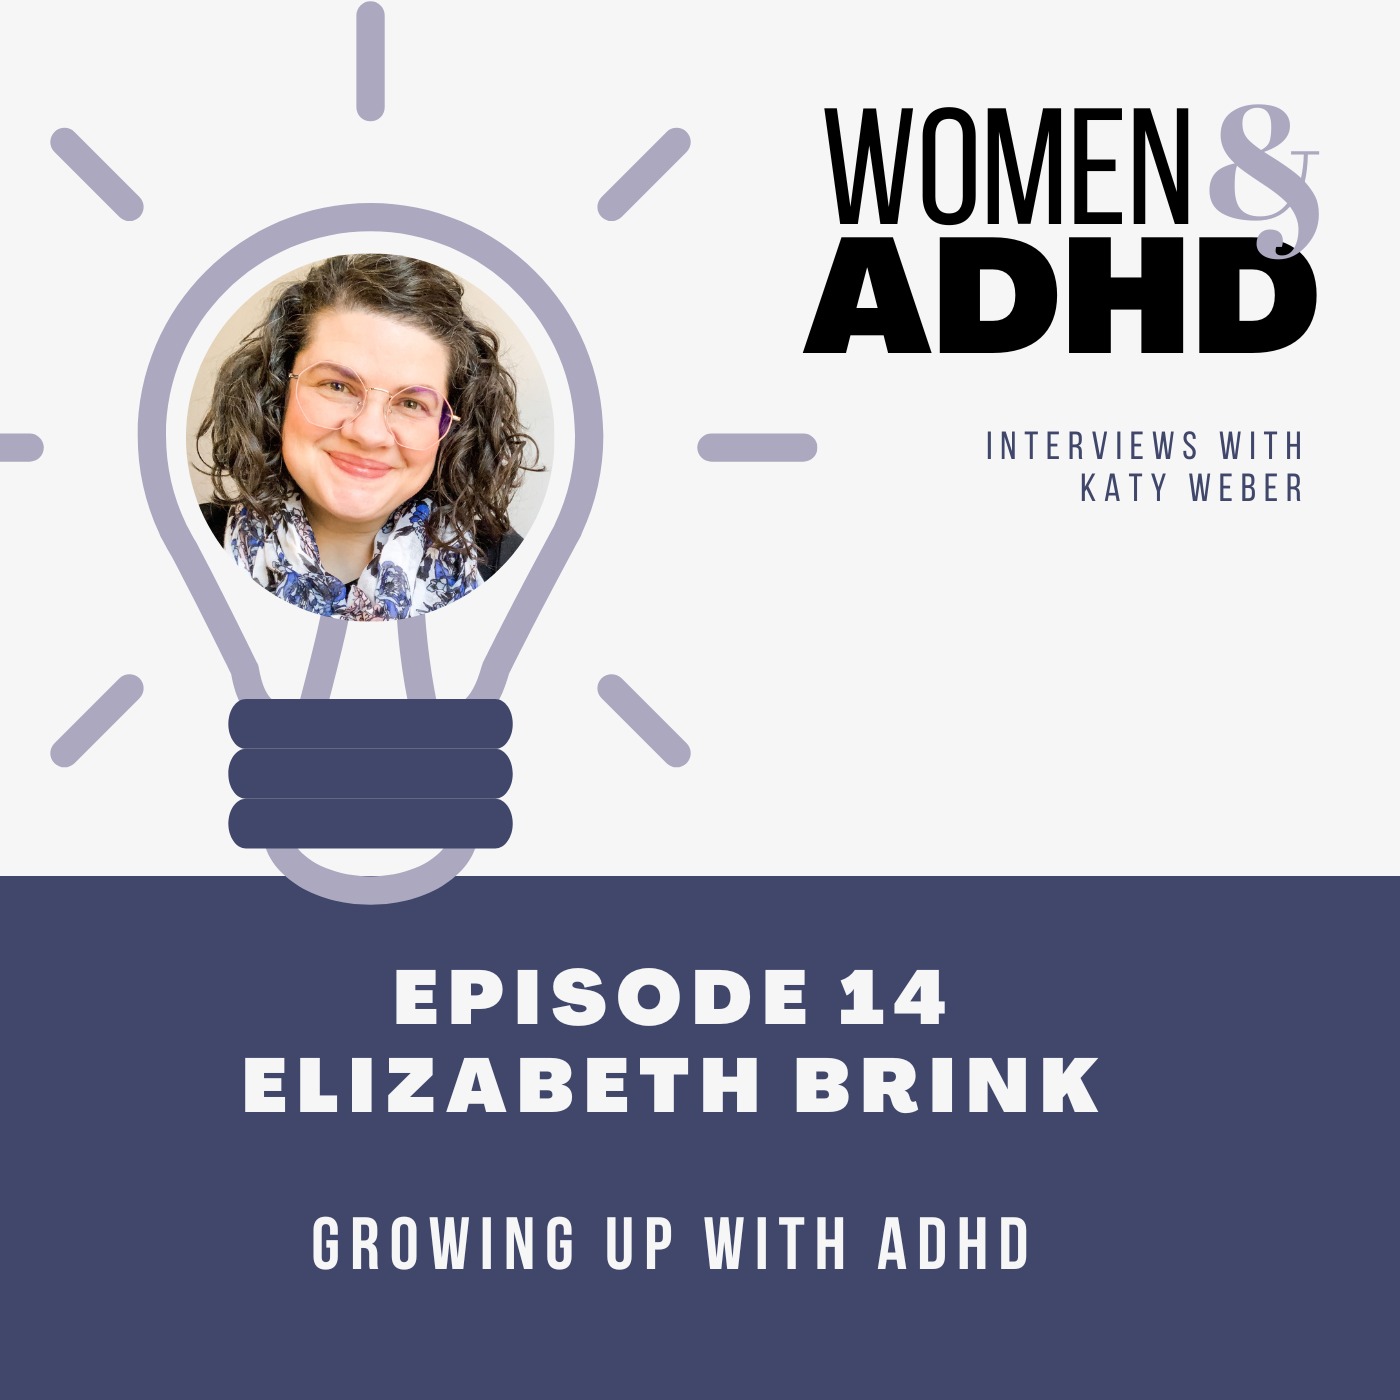 Elizabeth Brink: Growing up with ADHD